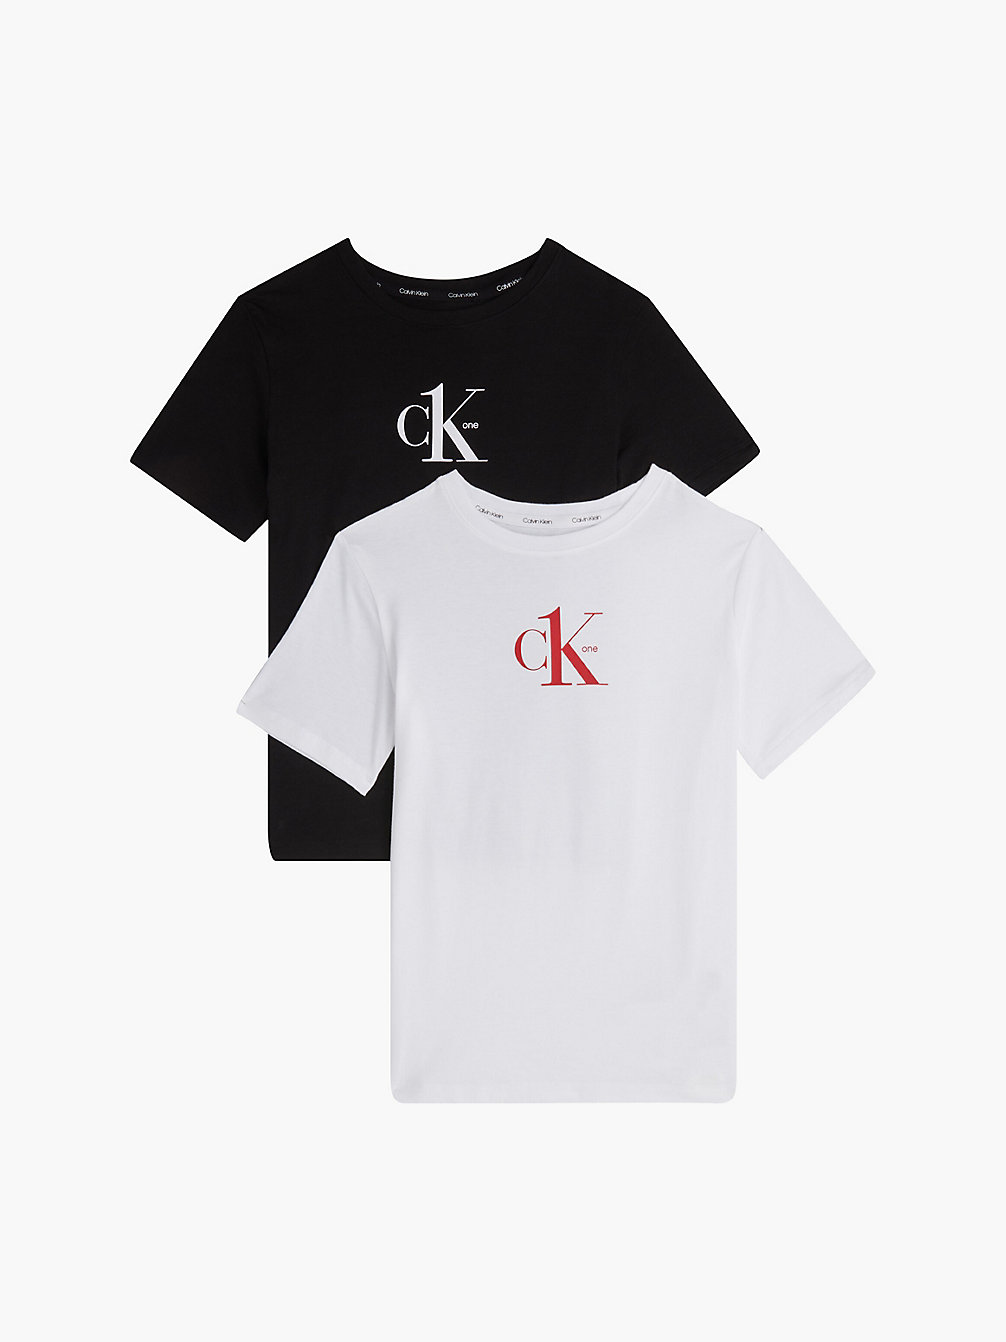 PVHBLACK/PVHWHITE 2-Pack Unisex-T-Shirts - CK One undefined kids unisex Calvin Klein